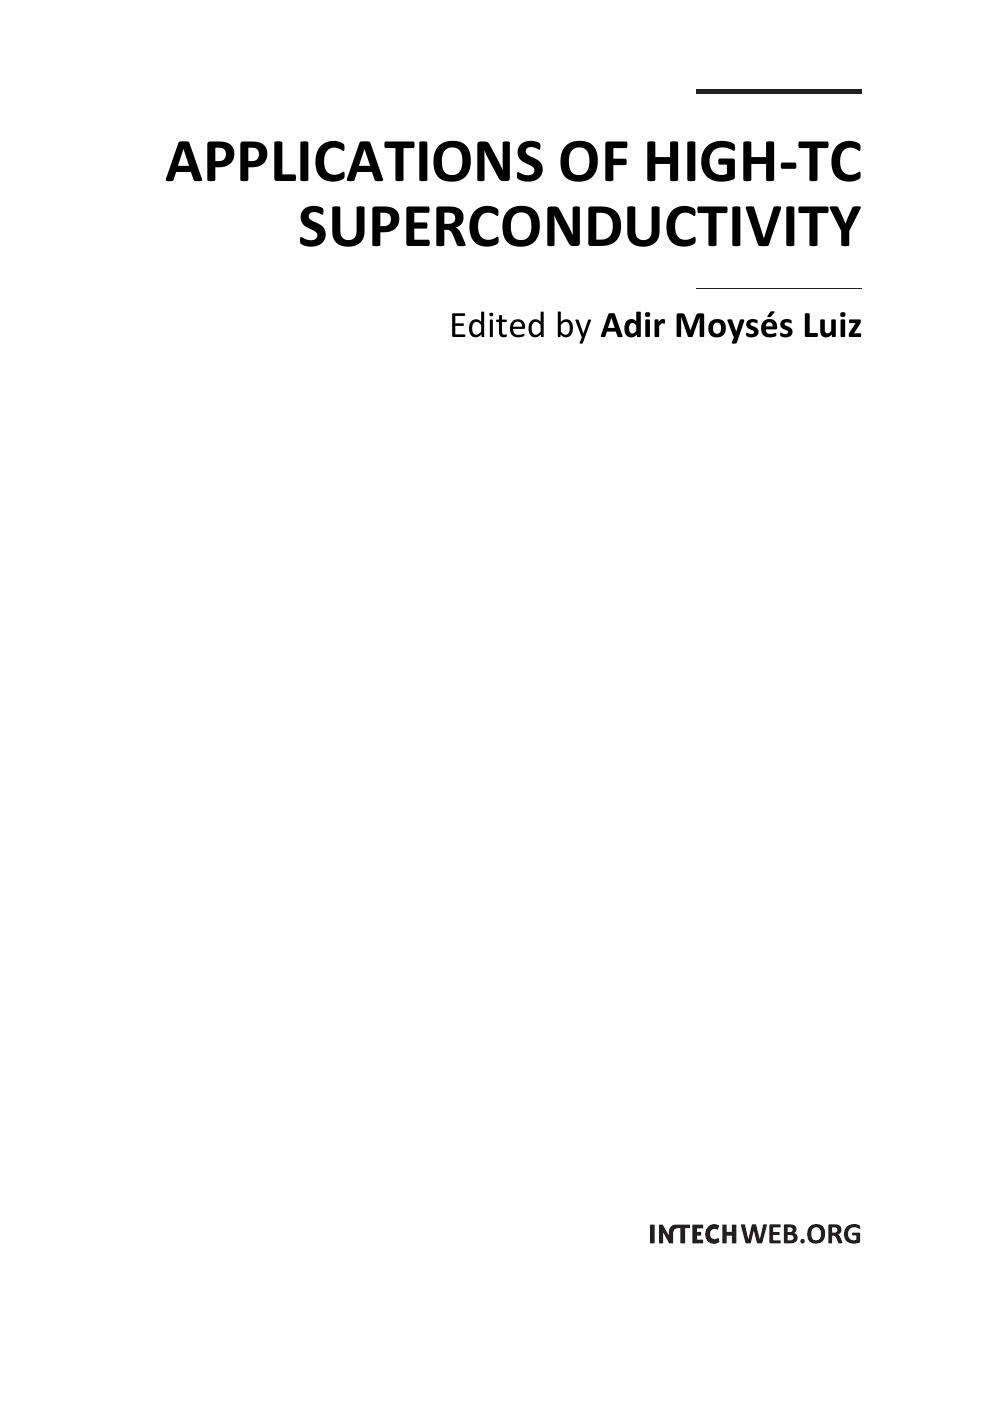 Applications of High-Tc Superconductivity 2011.pdf